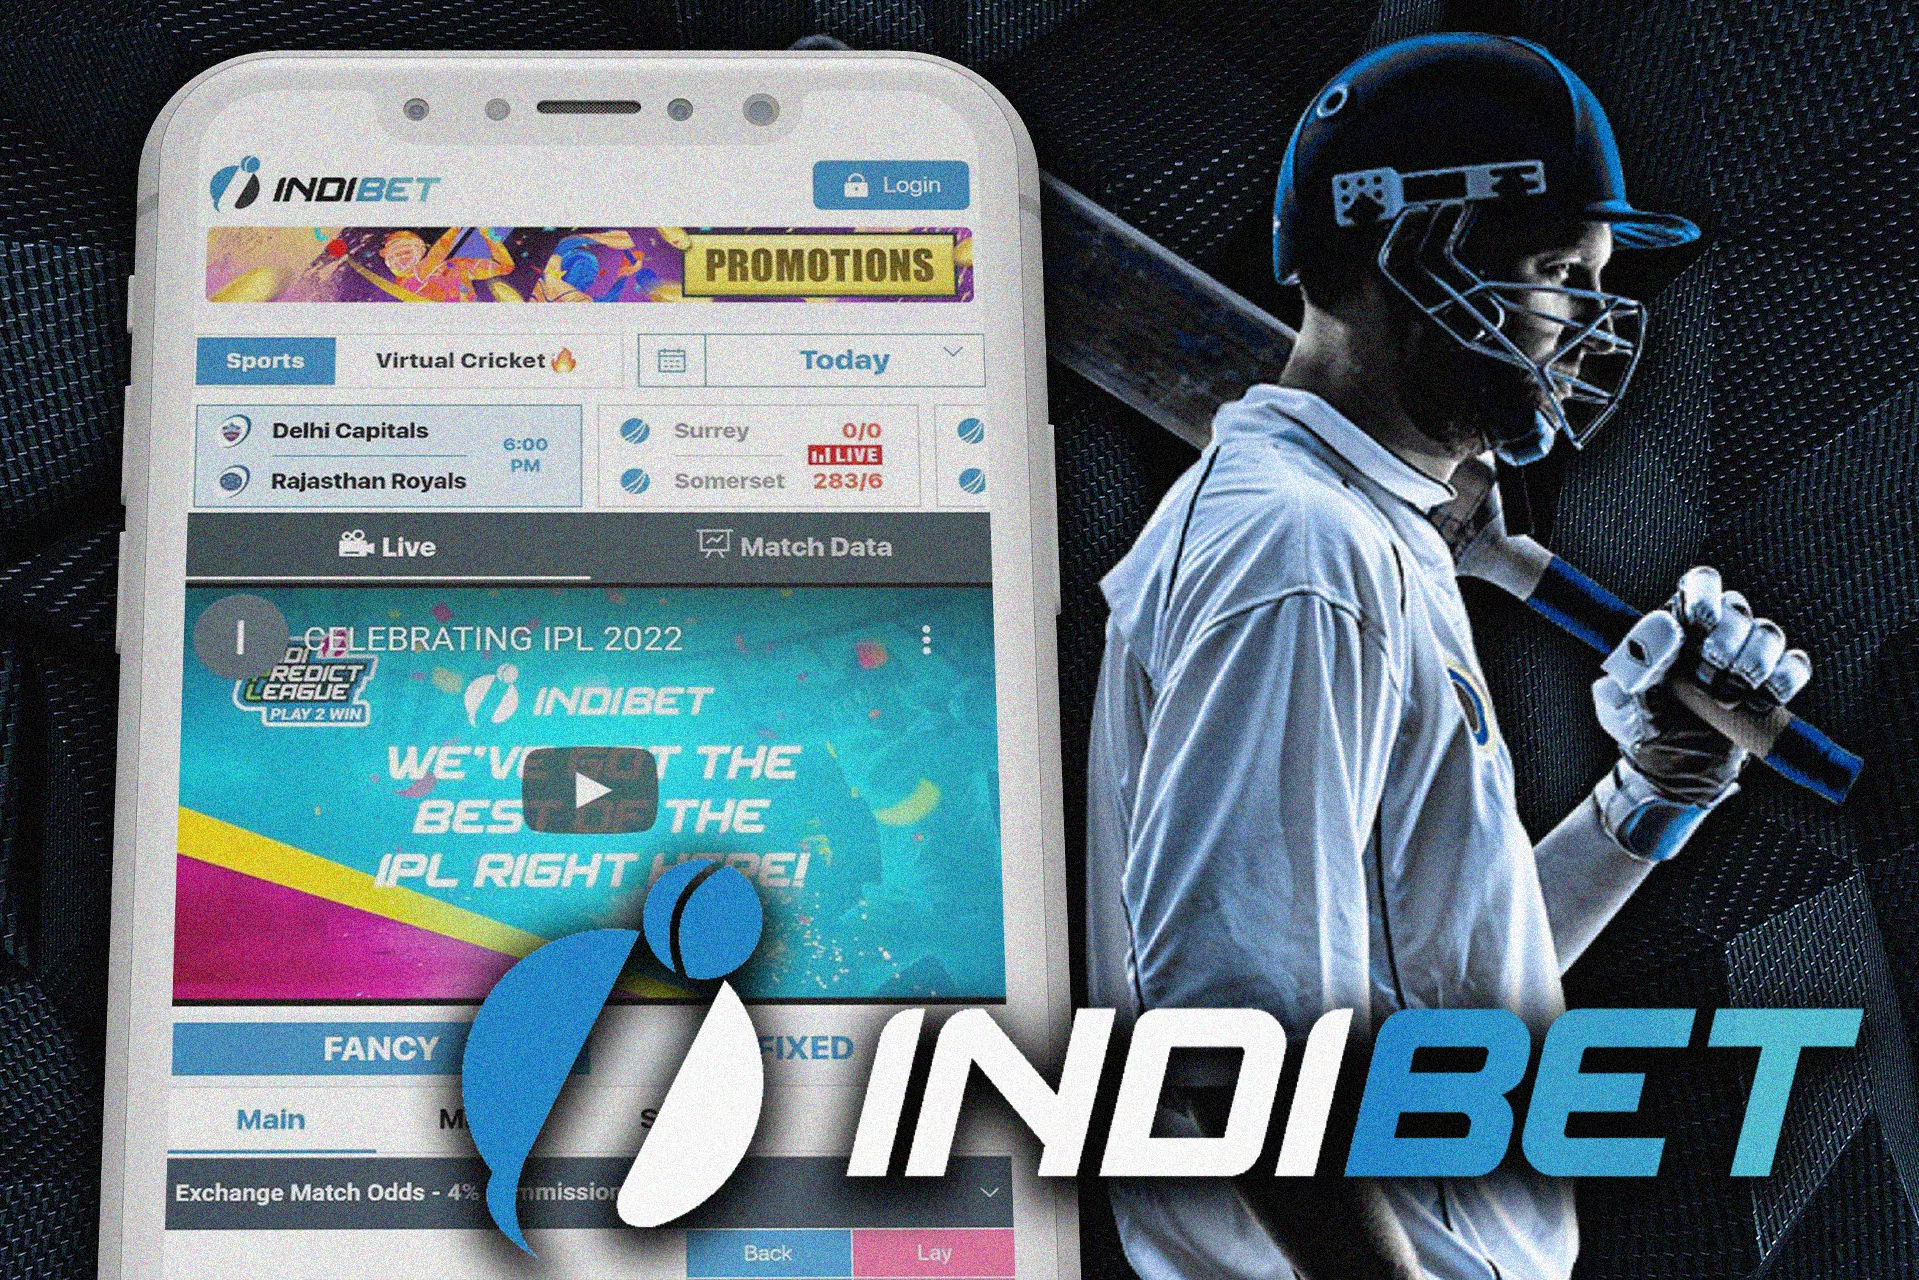 Indibet app for cricket betting.